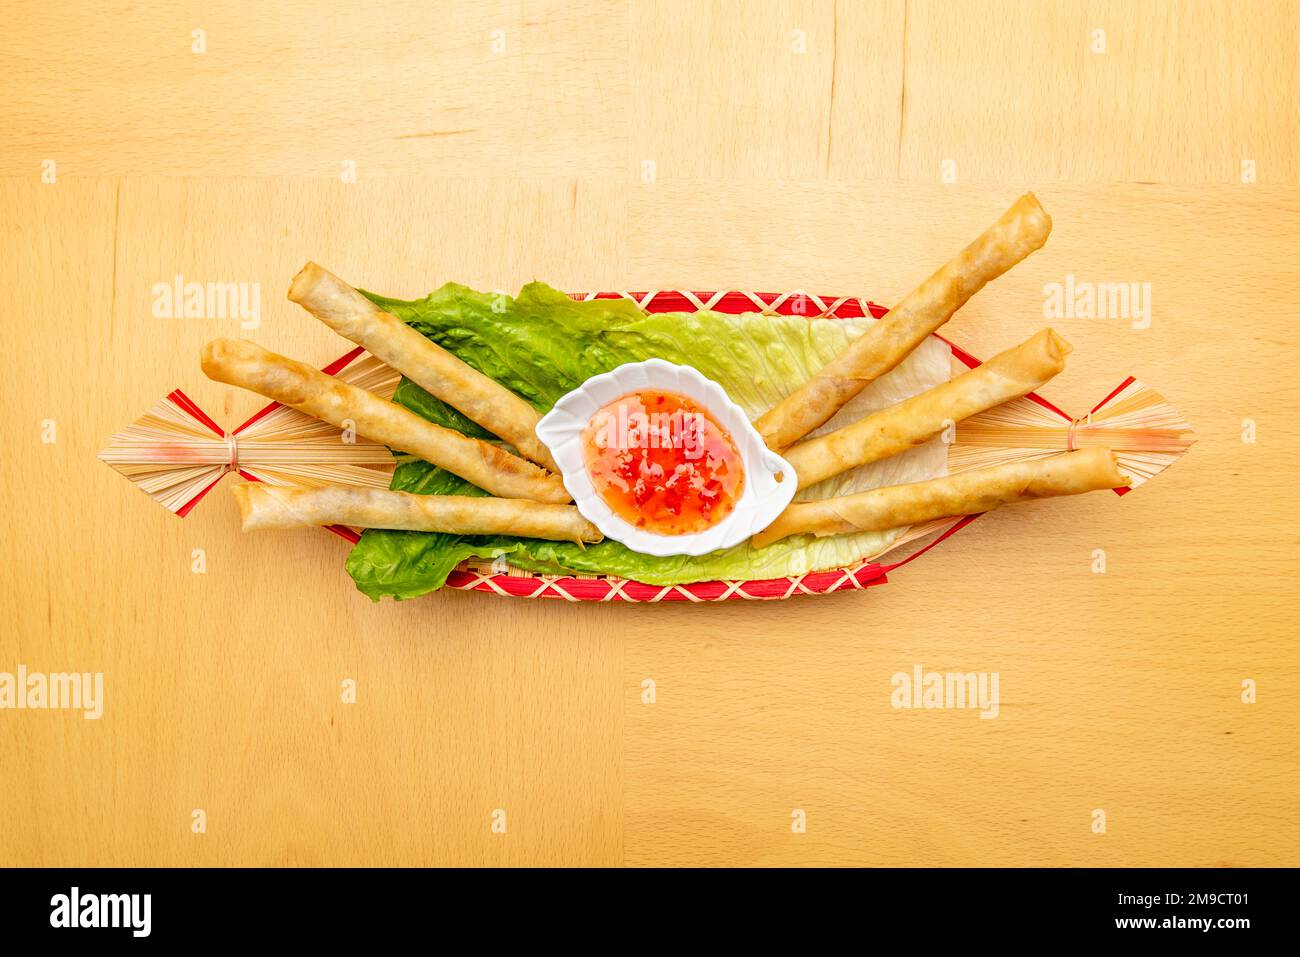 Pequeño rollo de masa de arroz, relleno de verduras, típico de la comida china con salsa agridulce para mojar Stock Photo